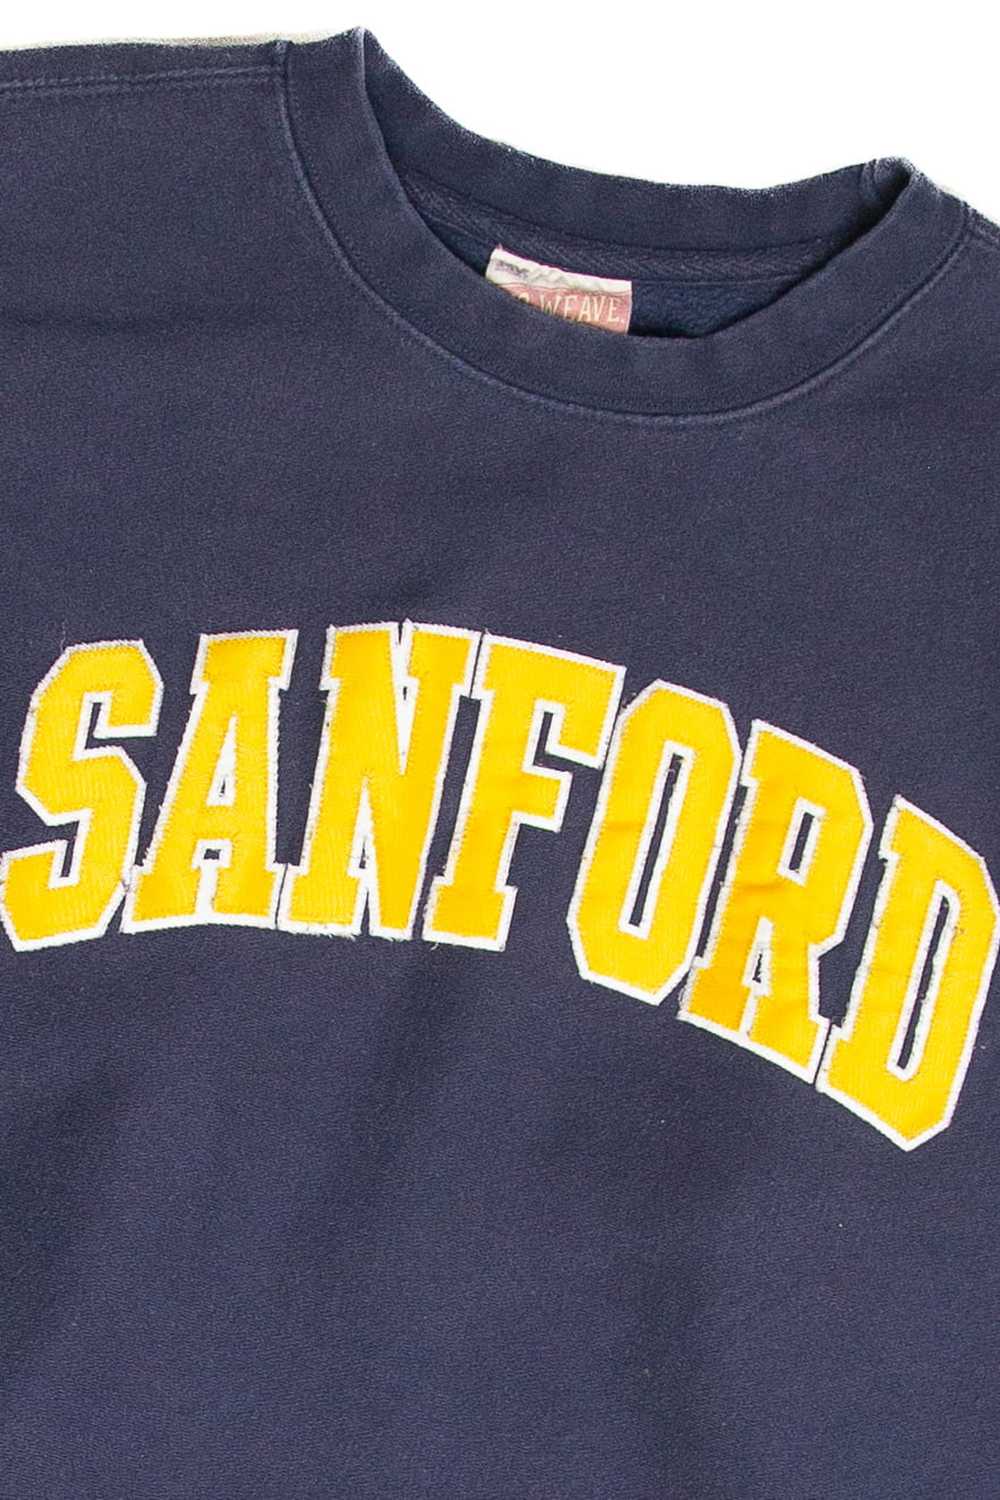 Vintage Sanford School Sweatshirt - image 2